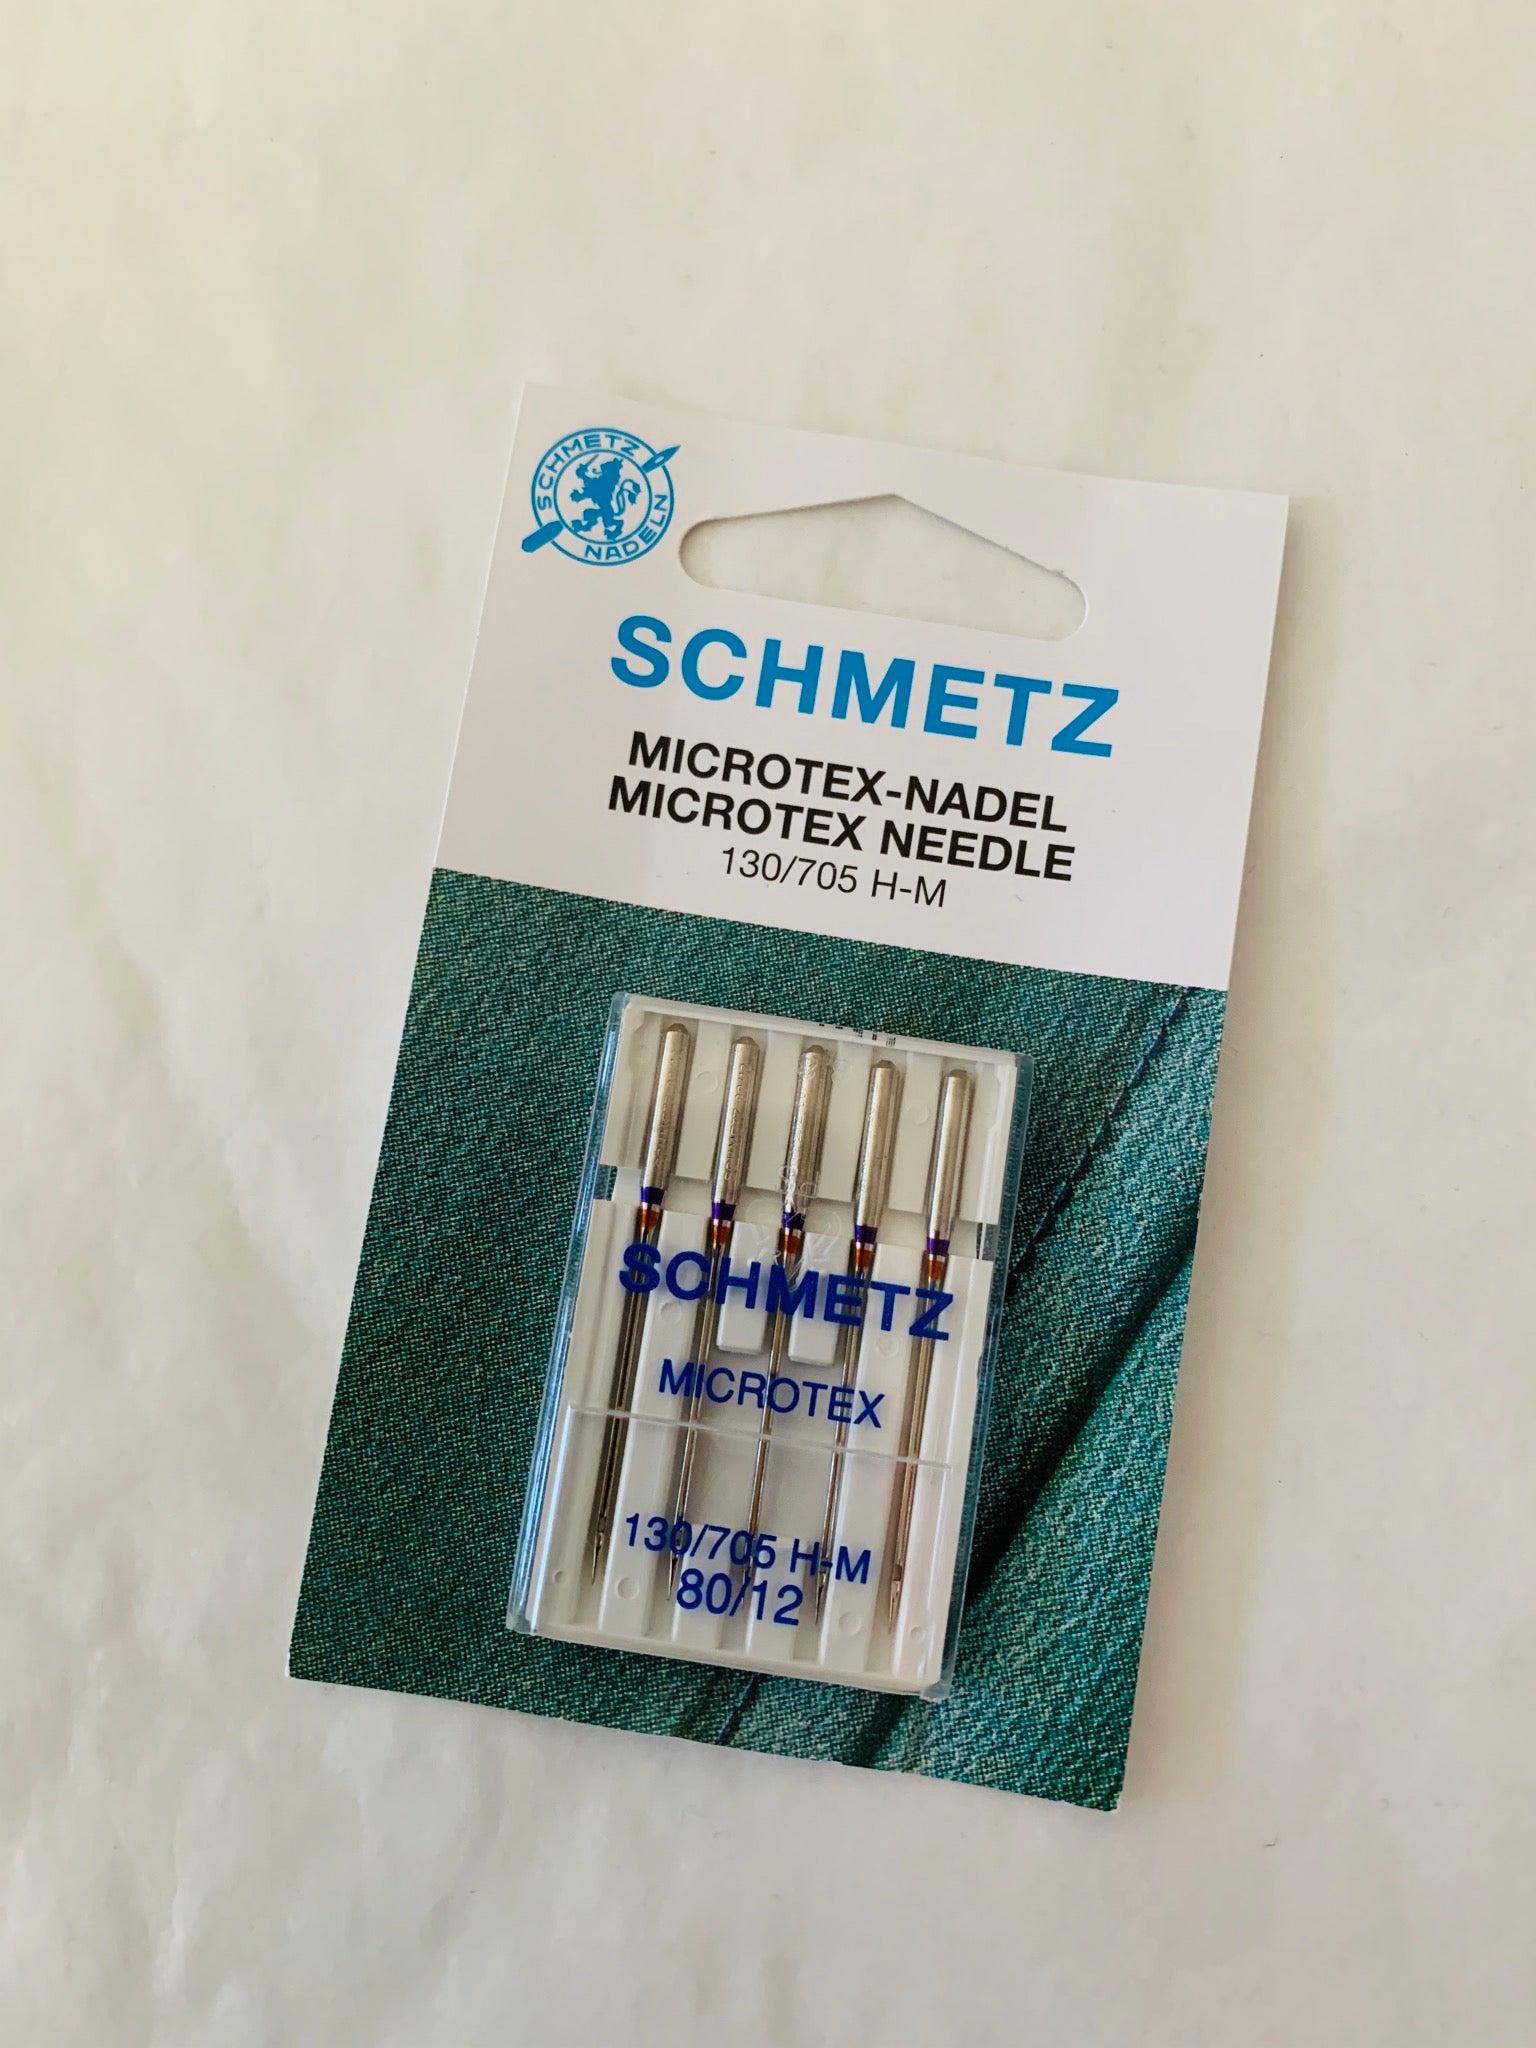 Schmetz sewing machine needles: Microtex 80/12